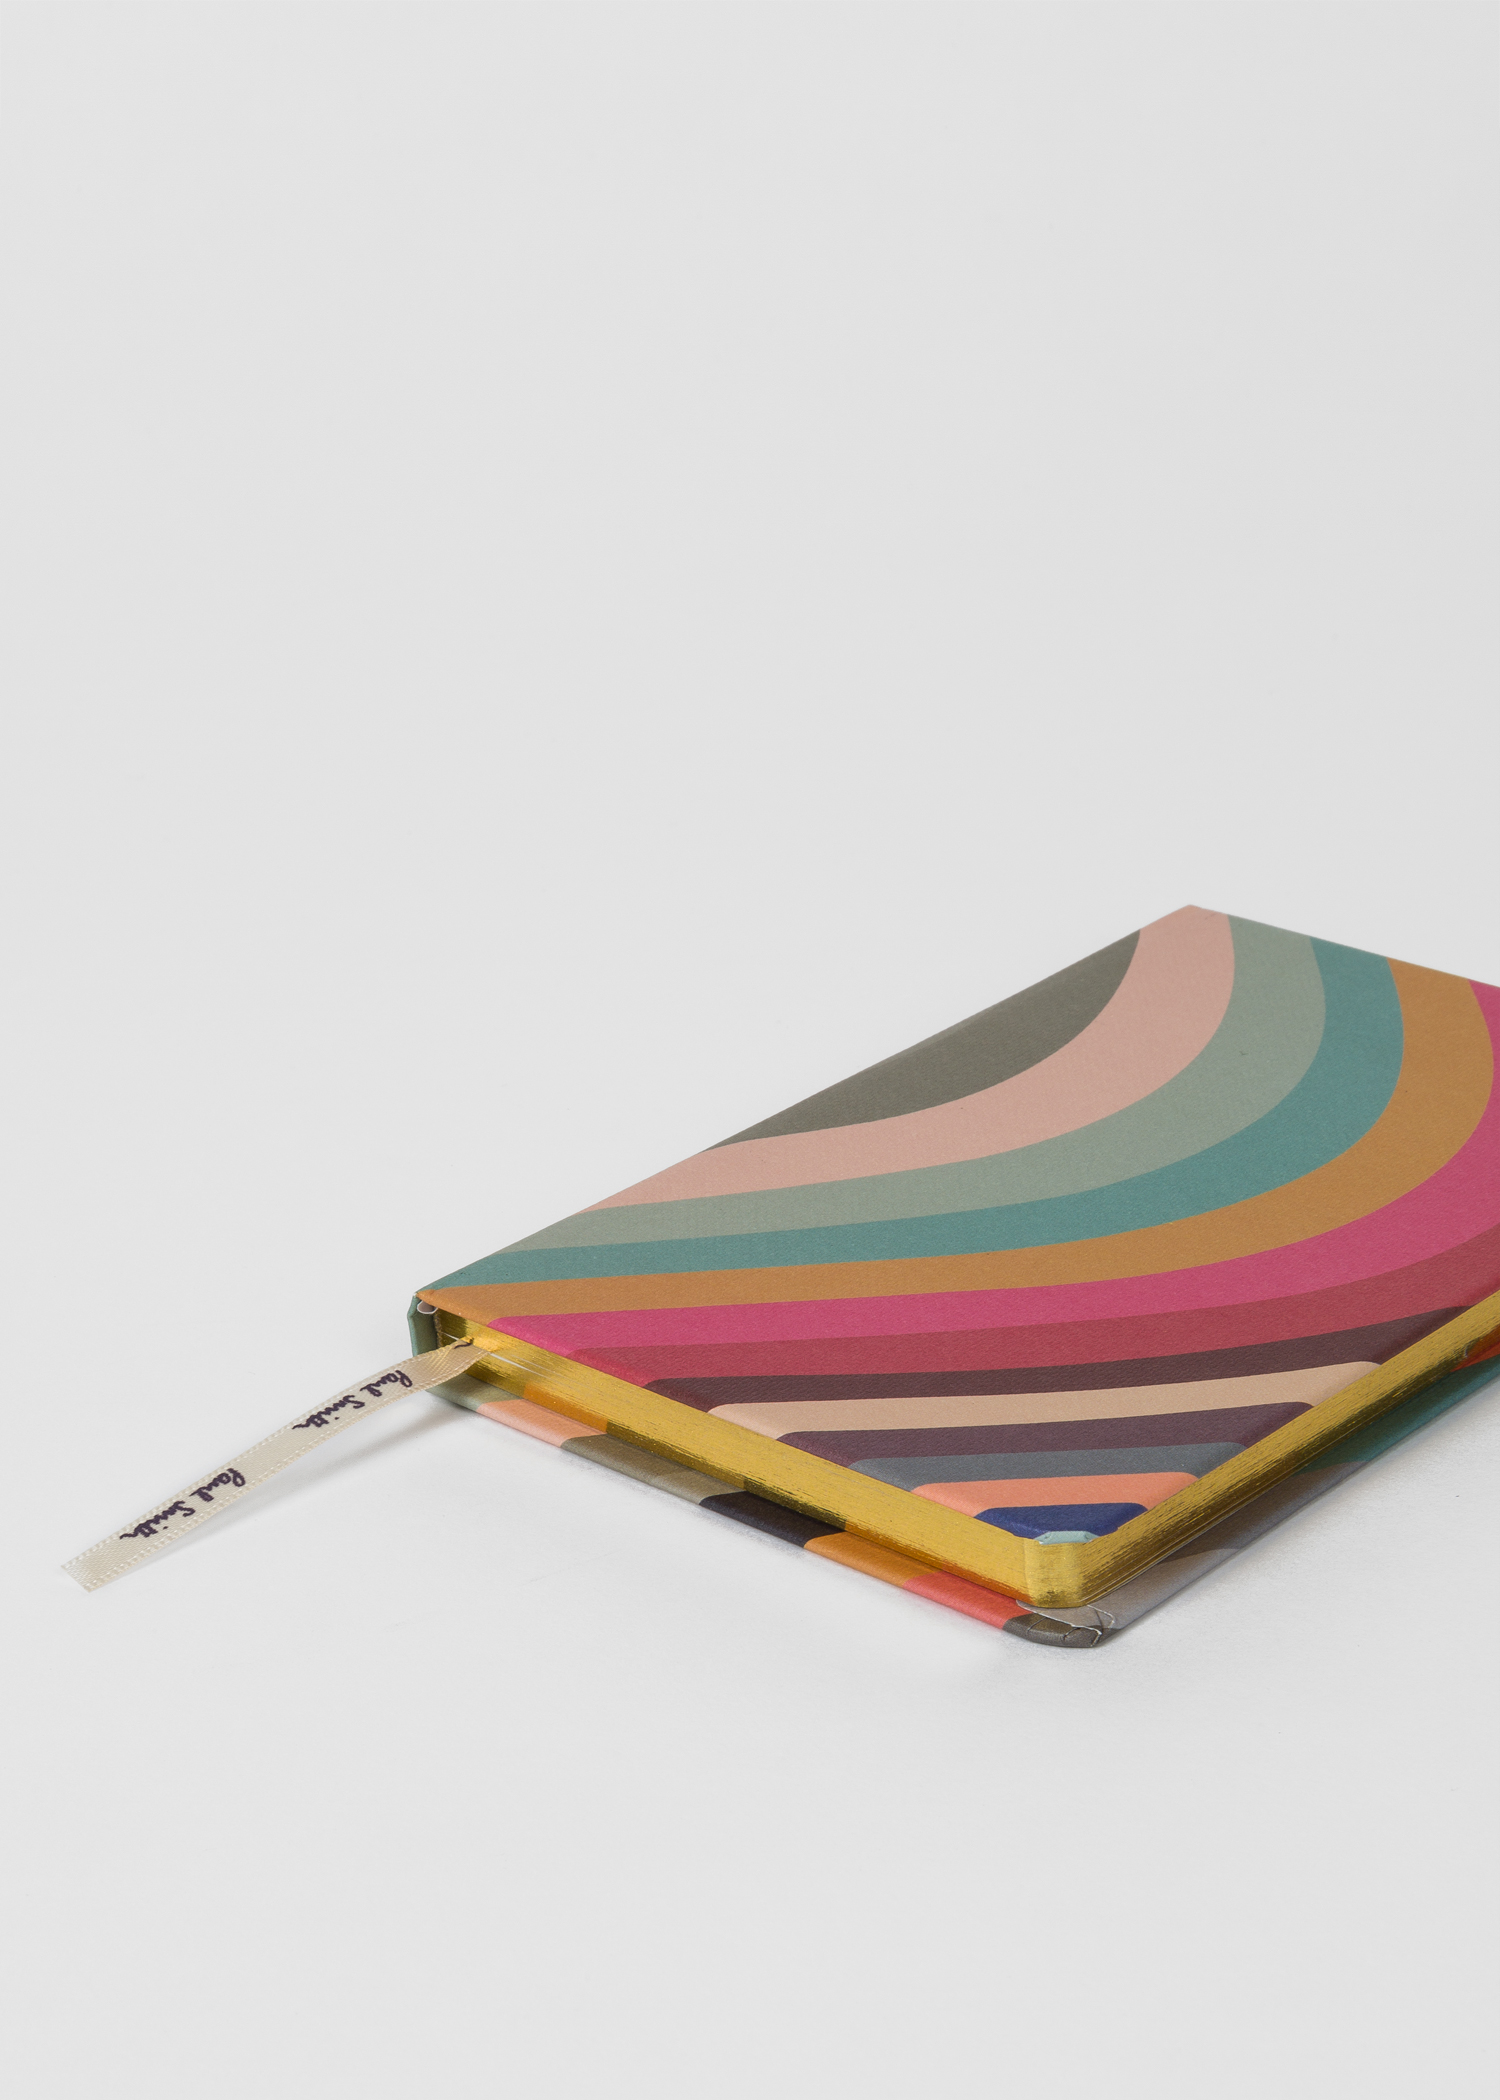 'Swirl' Pocket Notebook by Paul Smith